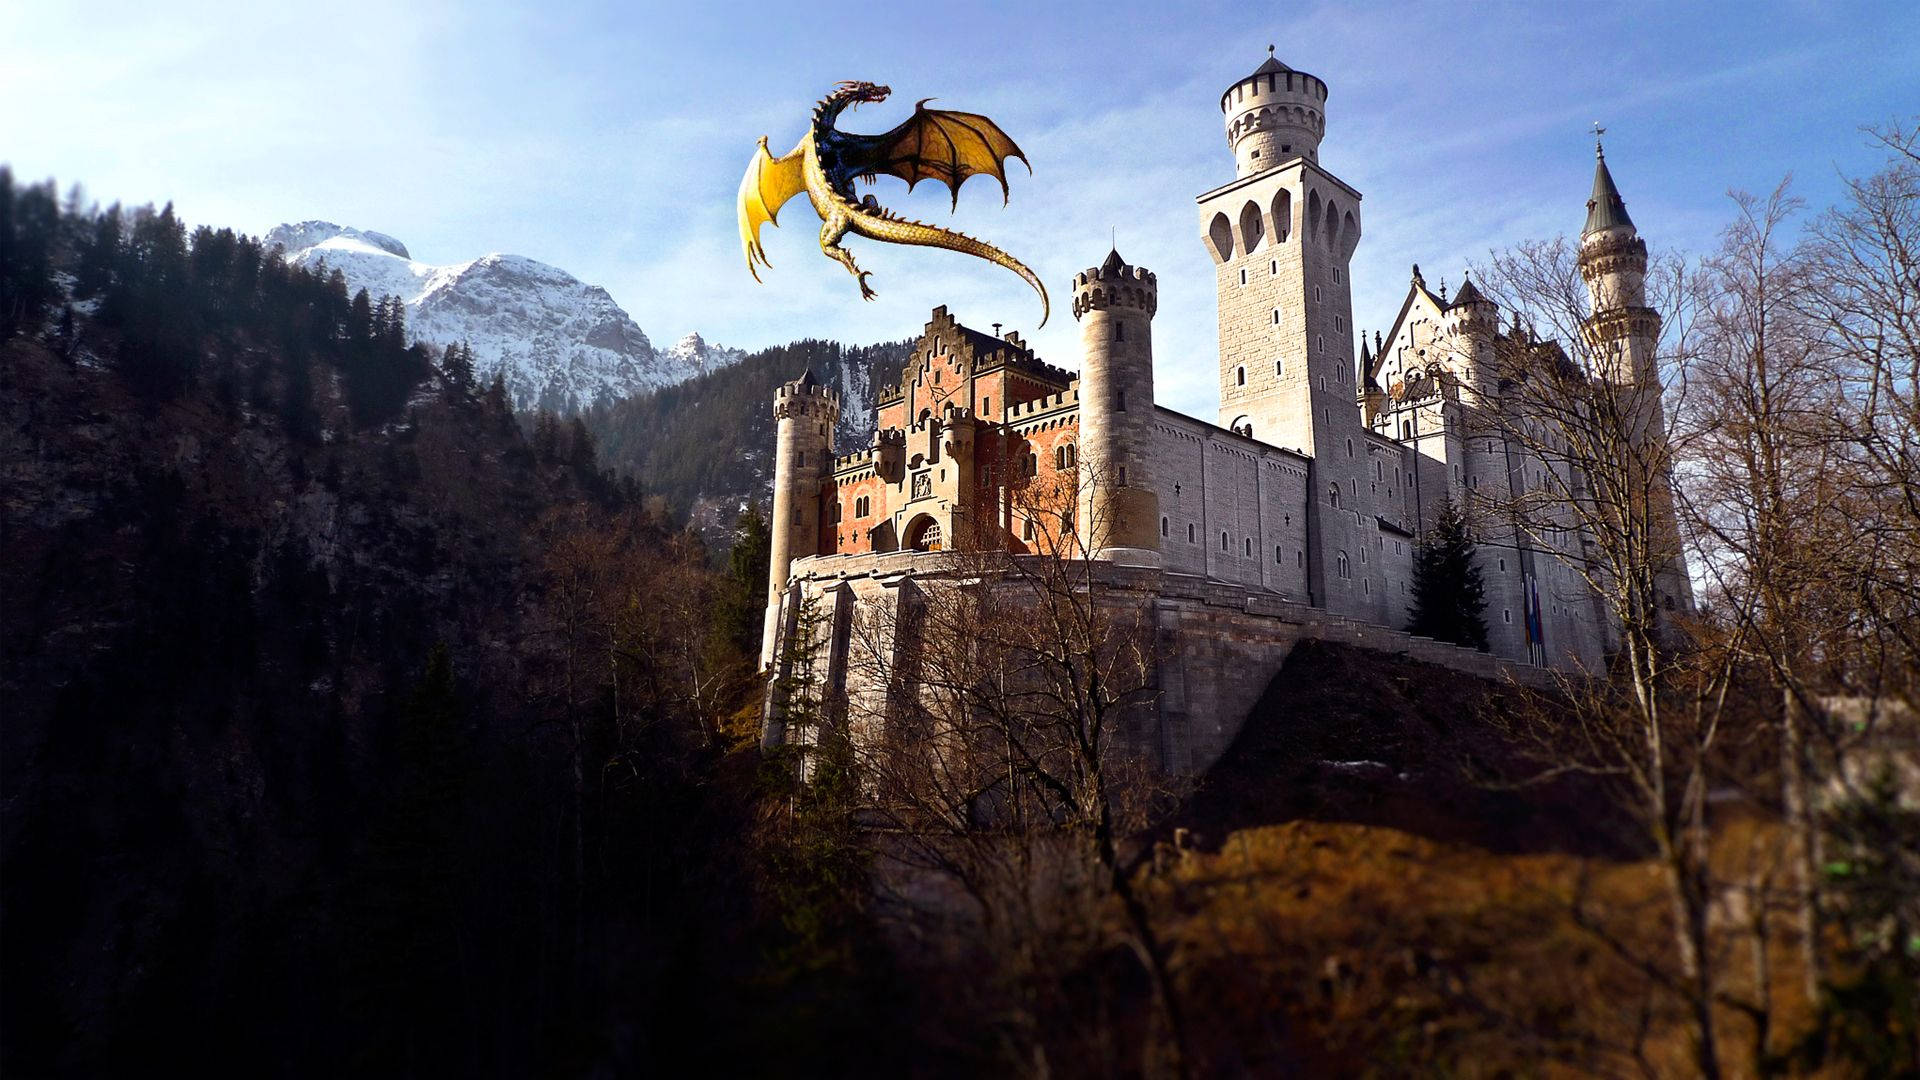 Dragon Castle, Hd Graphics, 4k Wallpaper, Image, Background Picture